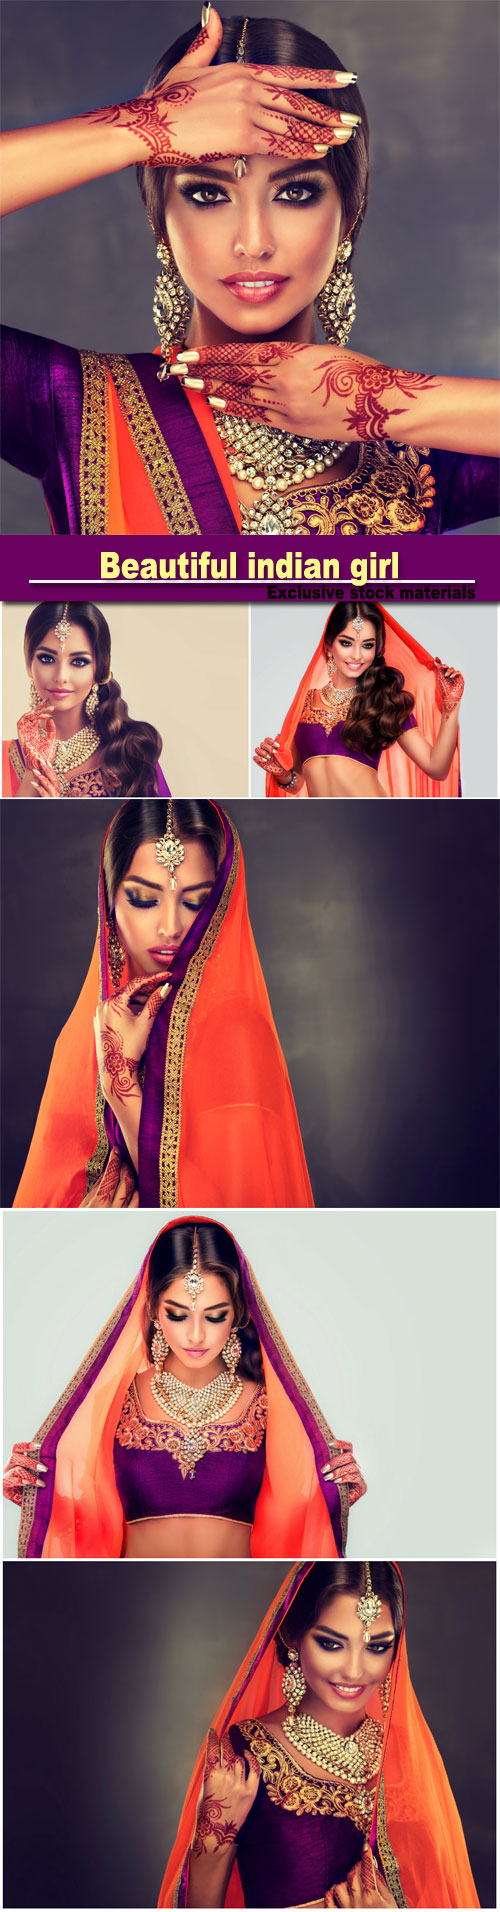 Portrait of beautiful indian girl, young hindu woman model with tatoo mehndi and kundan jewelry, traditional Indian costume lehenga choli